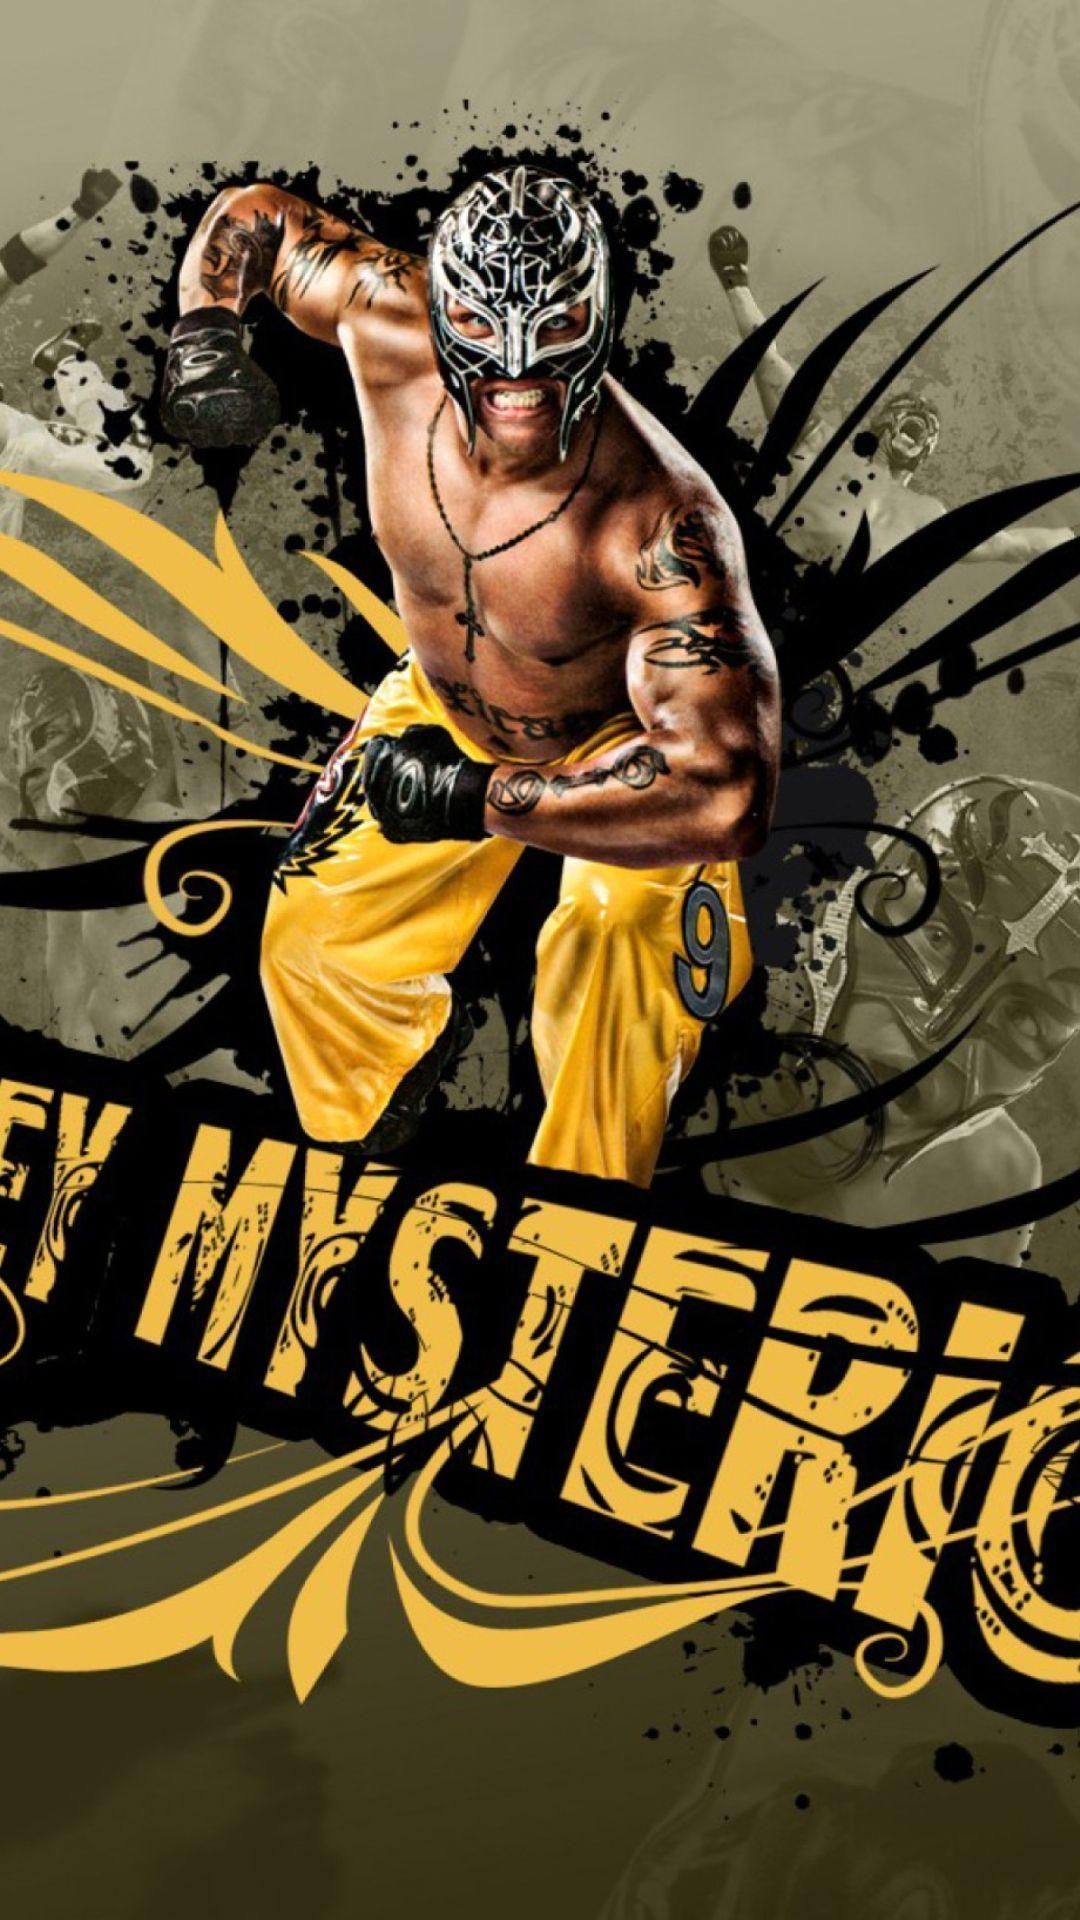 Rey Mysterio Wallpaper for iPhone. Wrestling stars, Wwe wallpaper, Professional wrestling